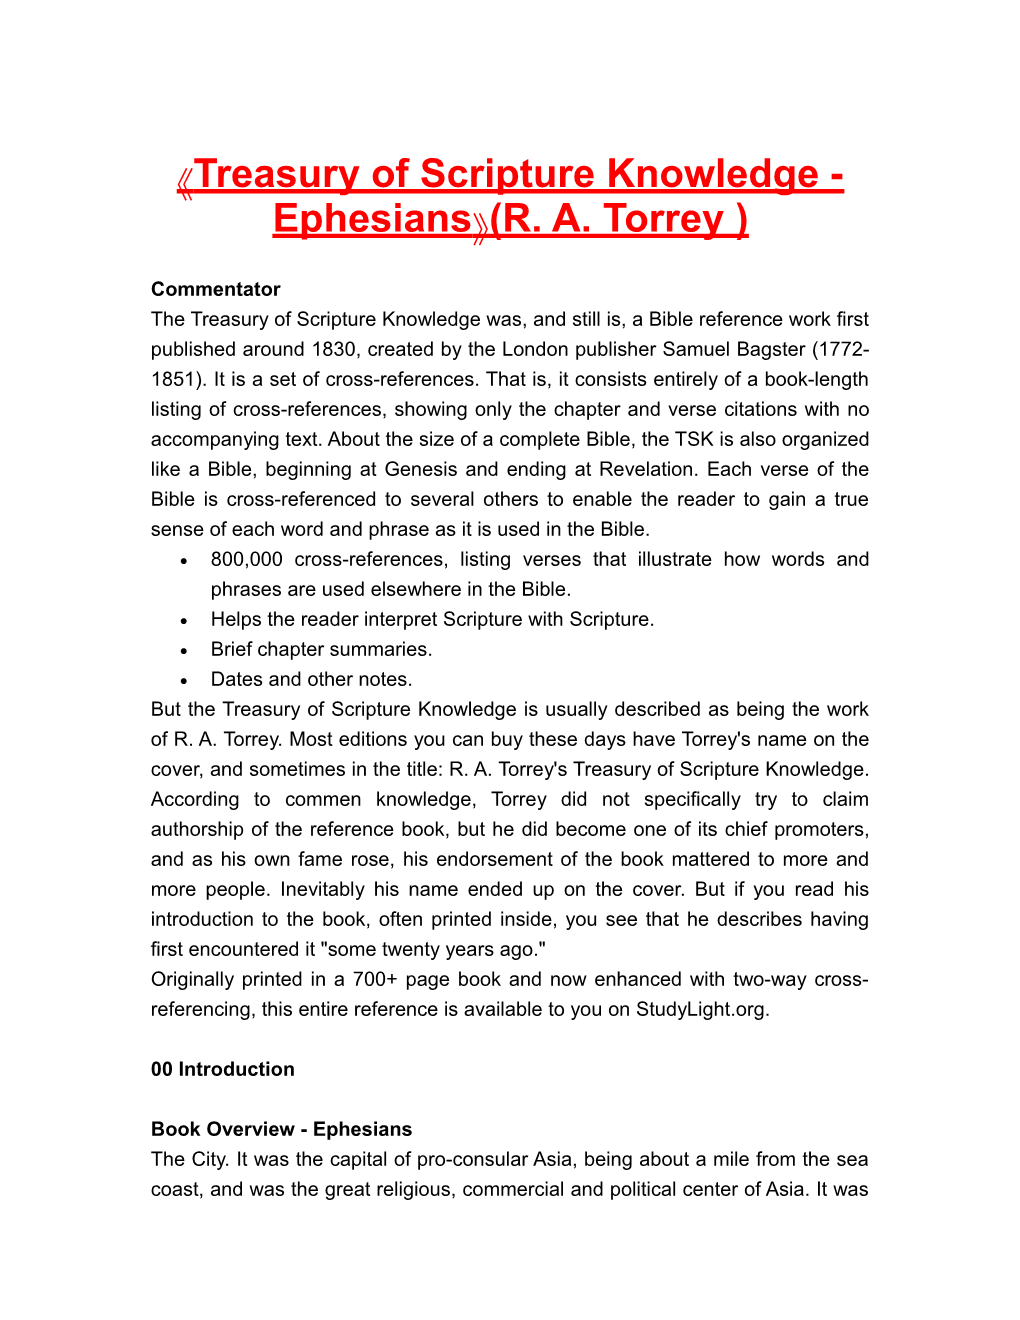 Treasuryofscriptureknowledge - Ephesians (R. A.Torrey)